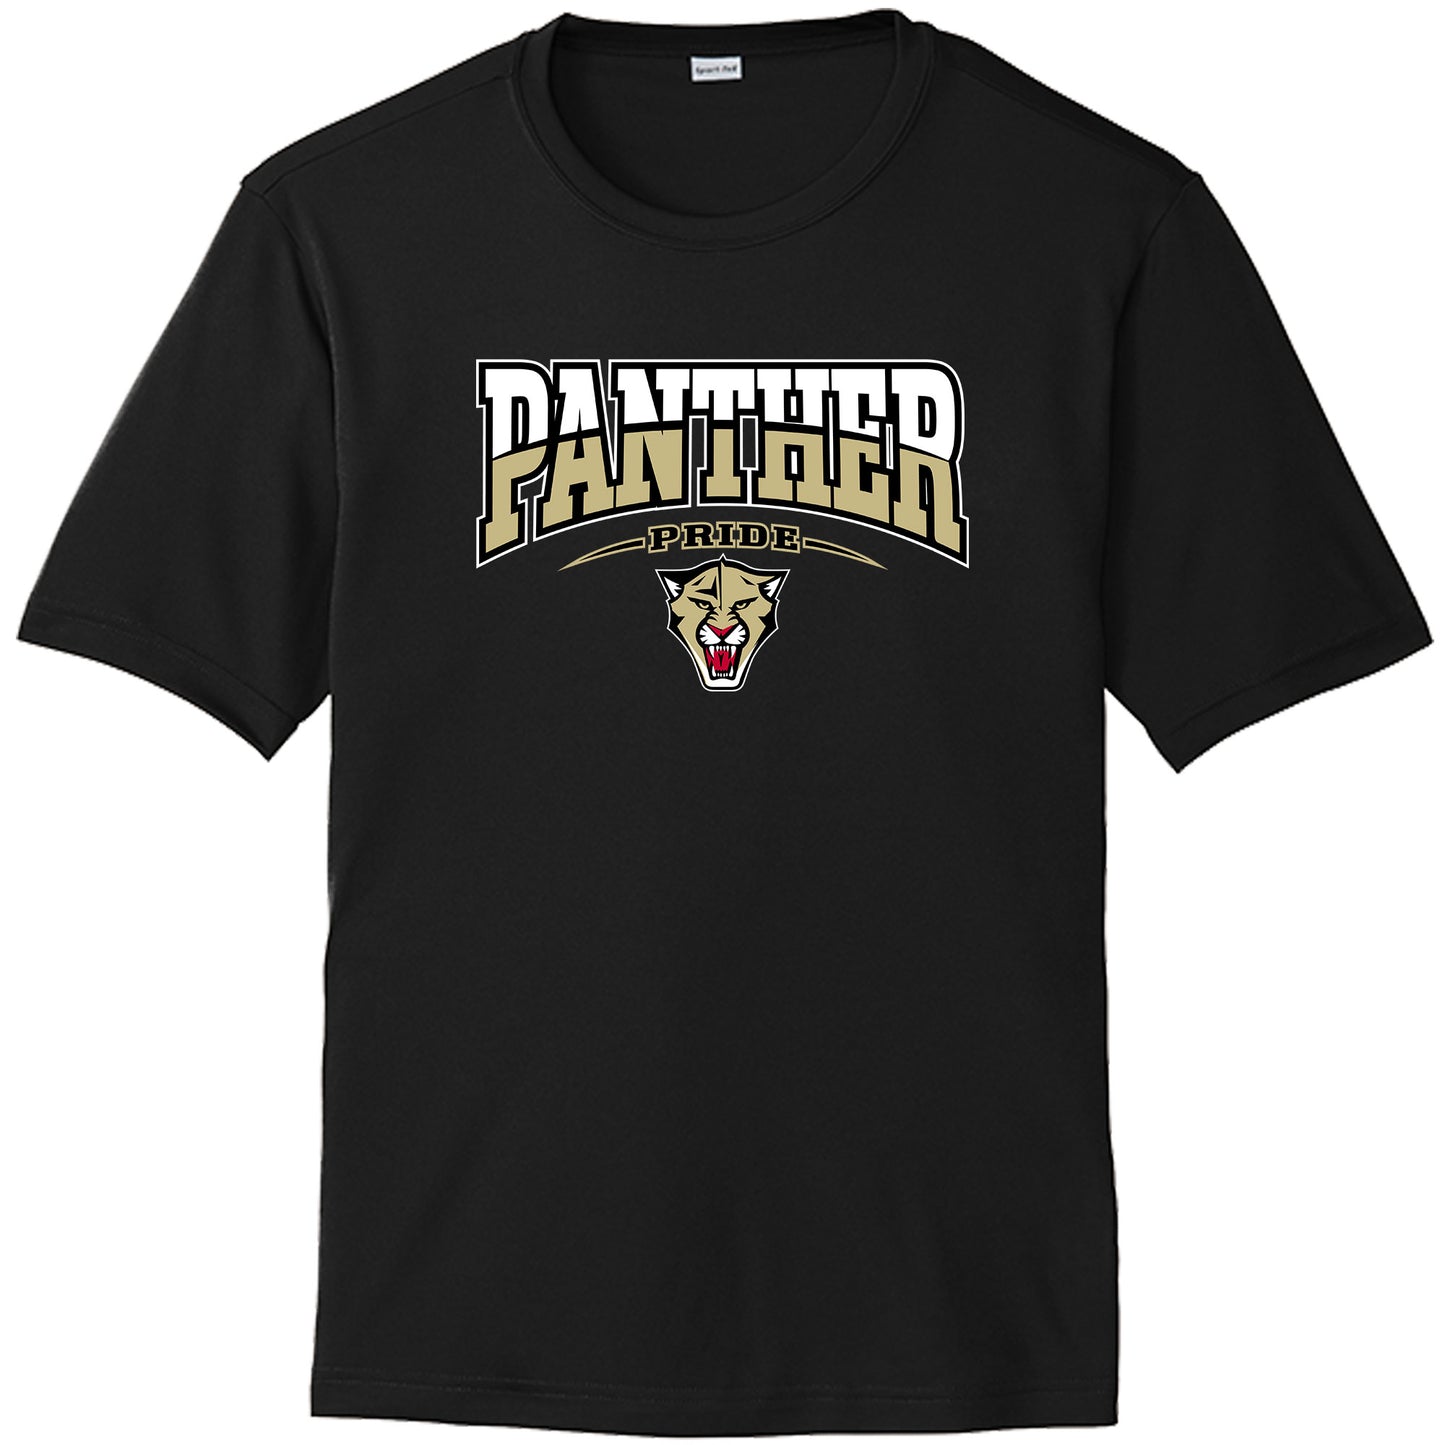 Plant High School Drifit Shirt "Panthers Pride"